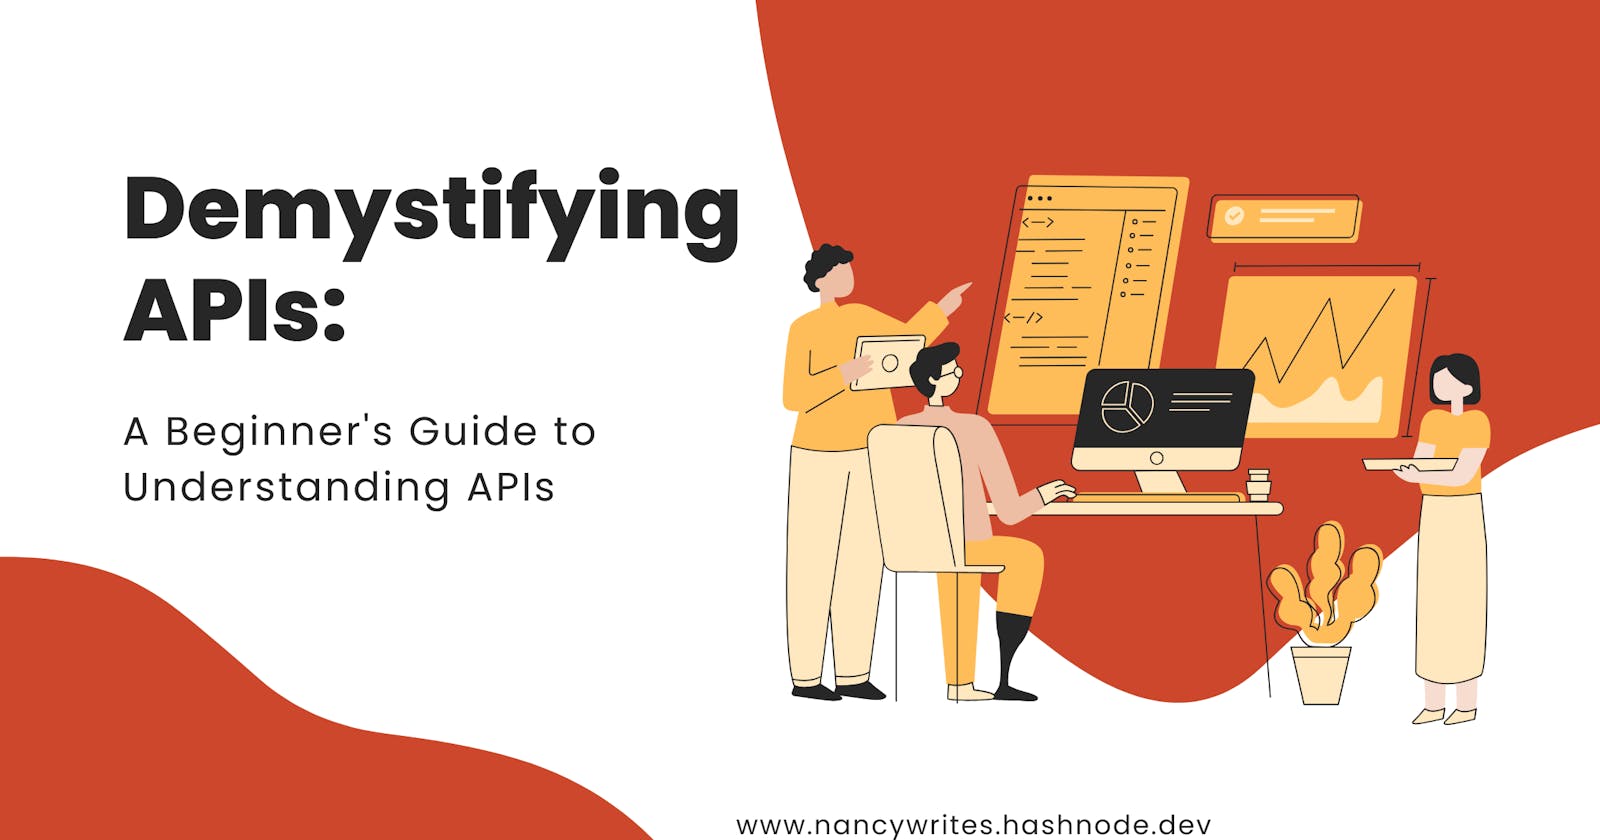 Demystifying APIs: A Beginner's Guide to Understanding APIs